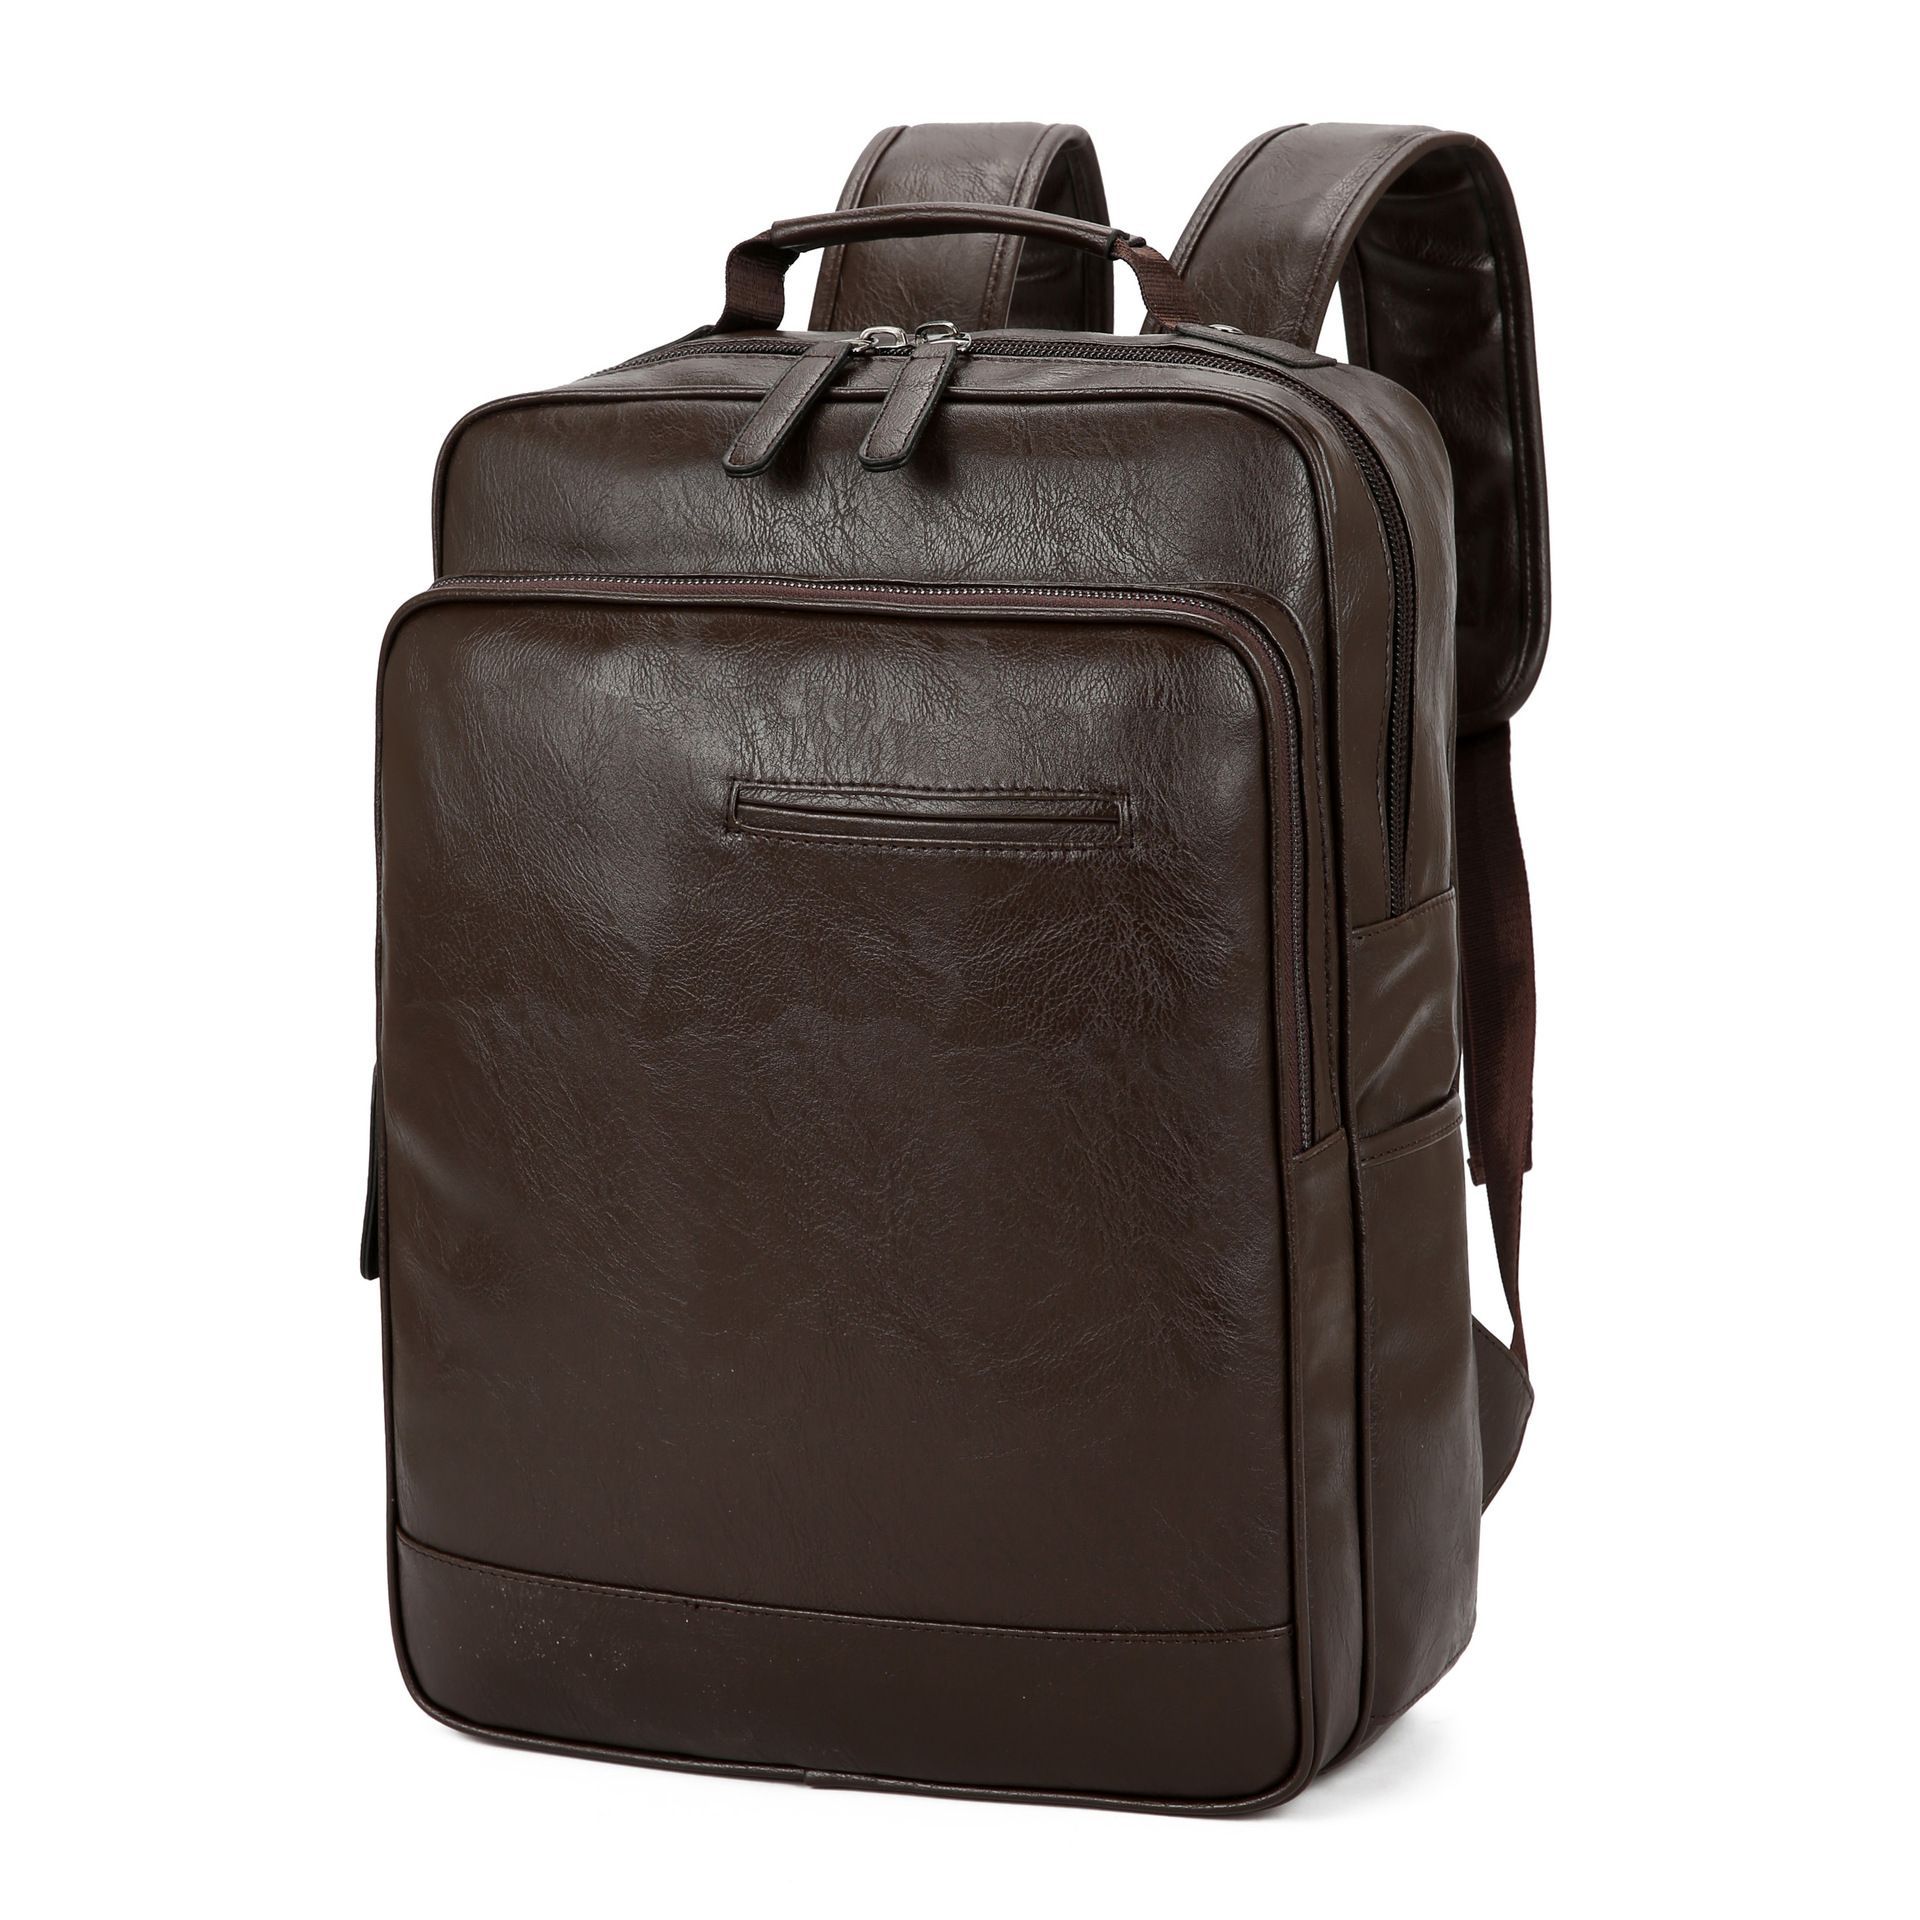 Рюкзак мужской Р-6 коричневый, 45х33х10 см